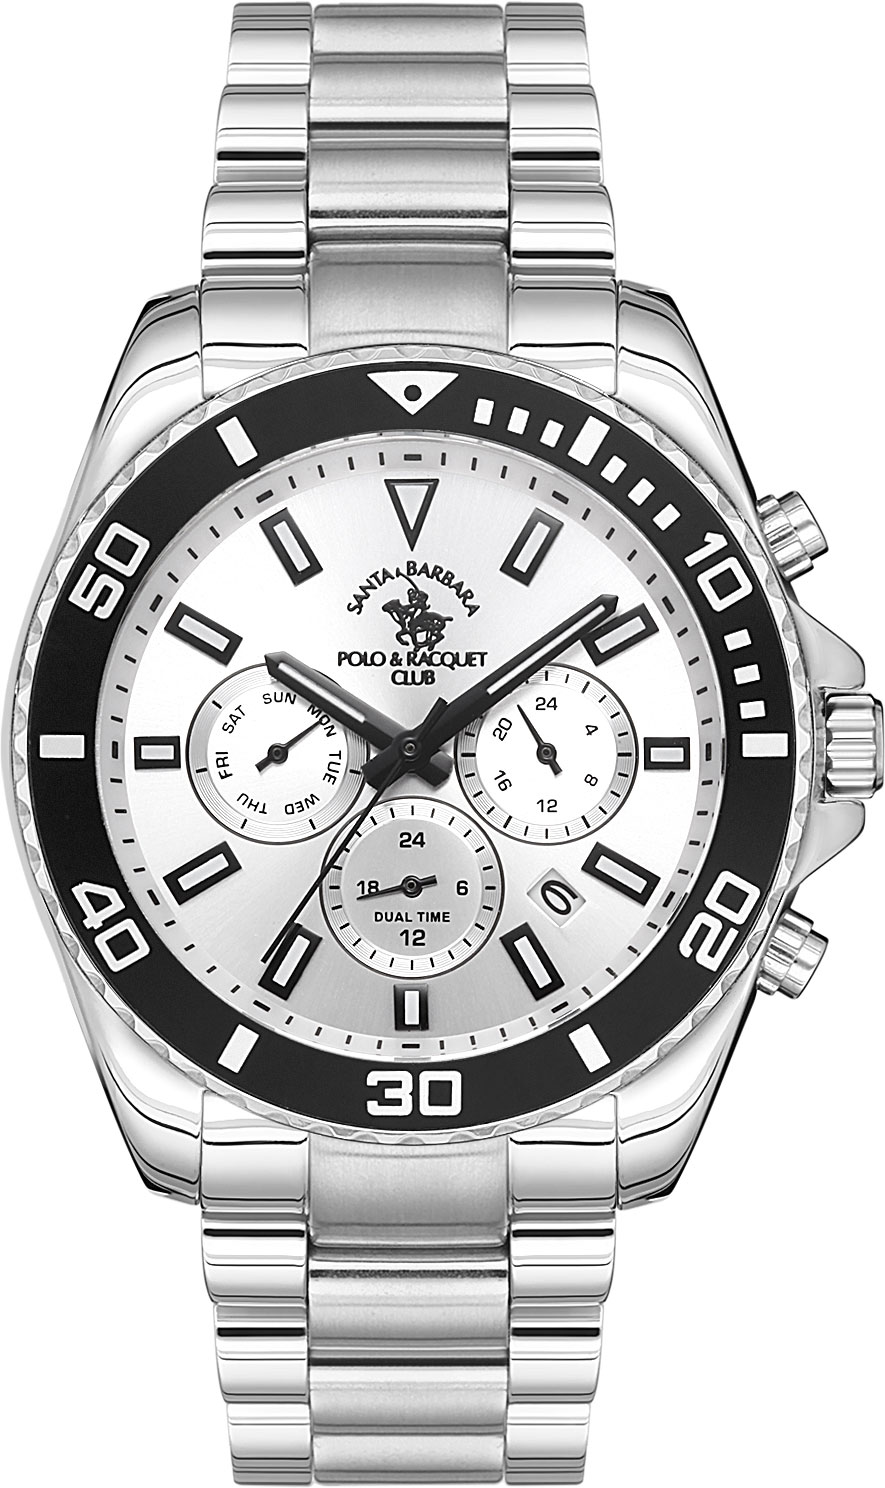 Наручные часы мужские Santa Barbara Polo & Racquet Club SB.1.10286-1